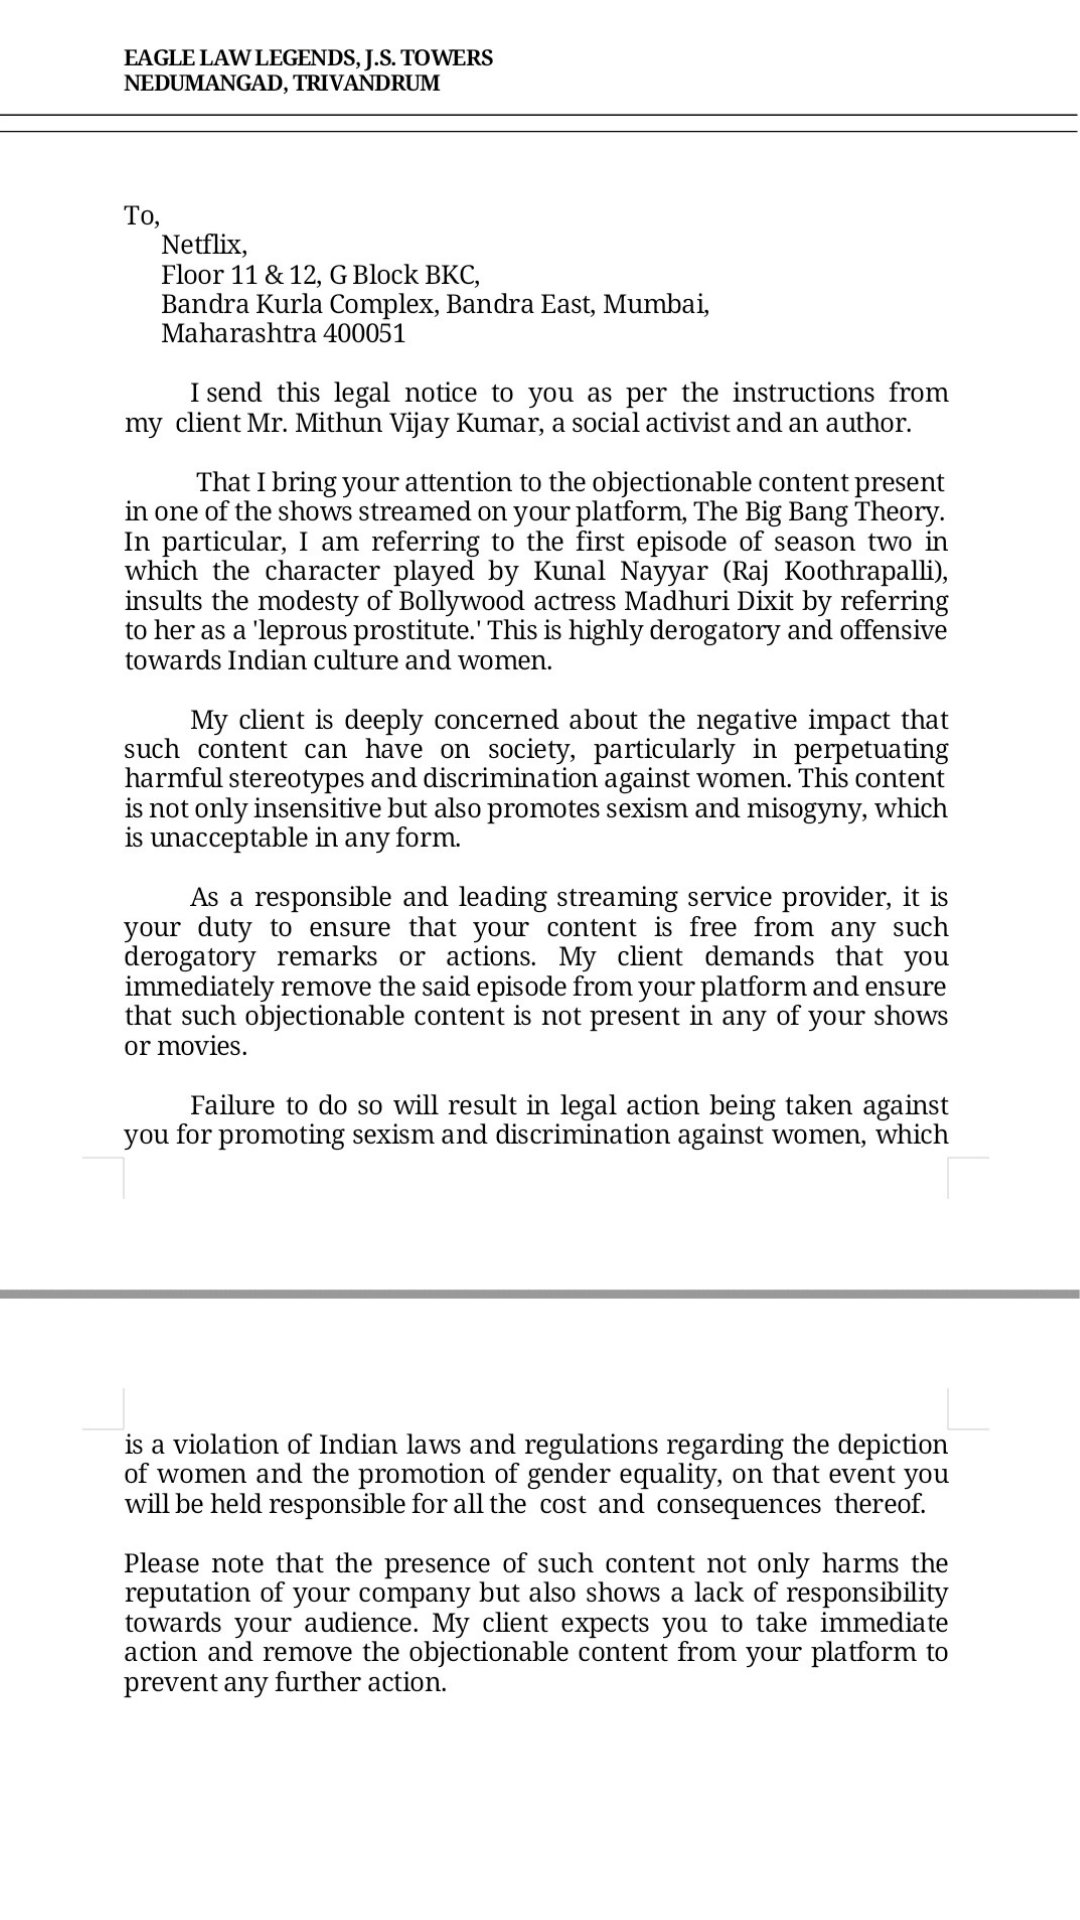 Fragmento del documento que el abogado de Kumar mandó a Netflix en un esfuerzo por eliminar el episodio donde se insulta a Madhuri Dixit. Foto: @MVJonline